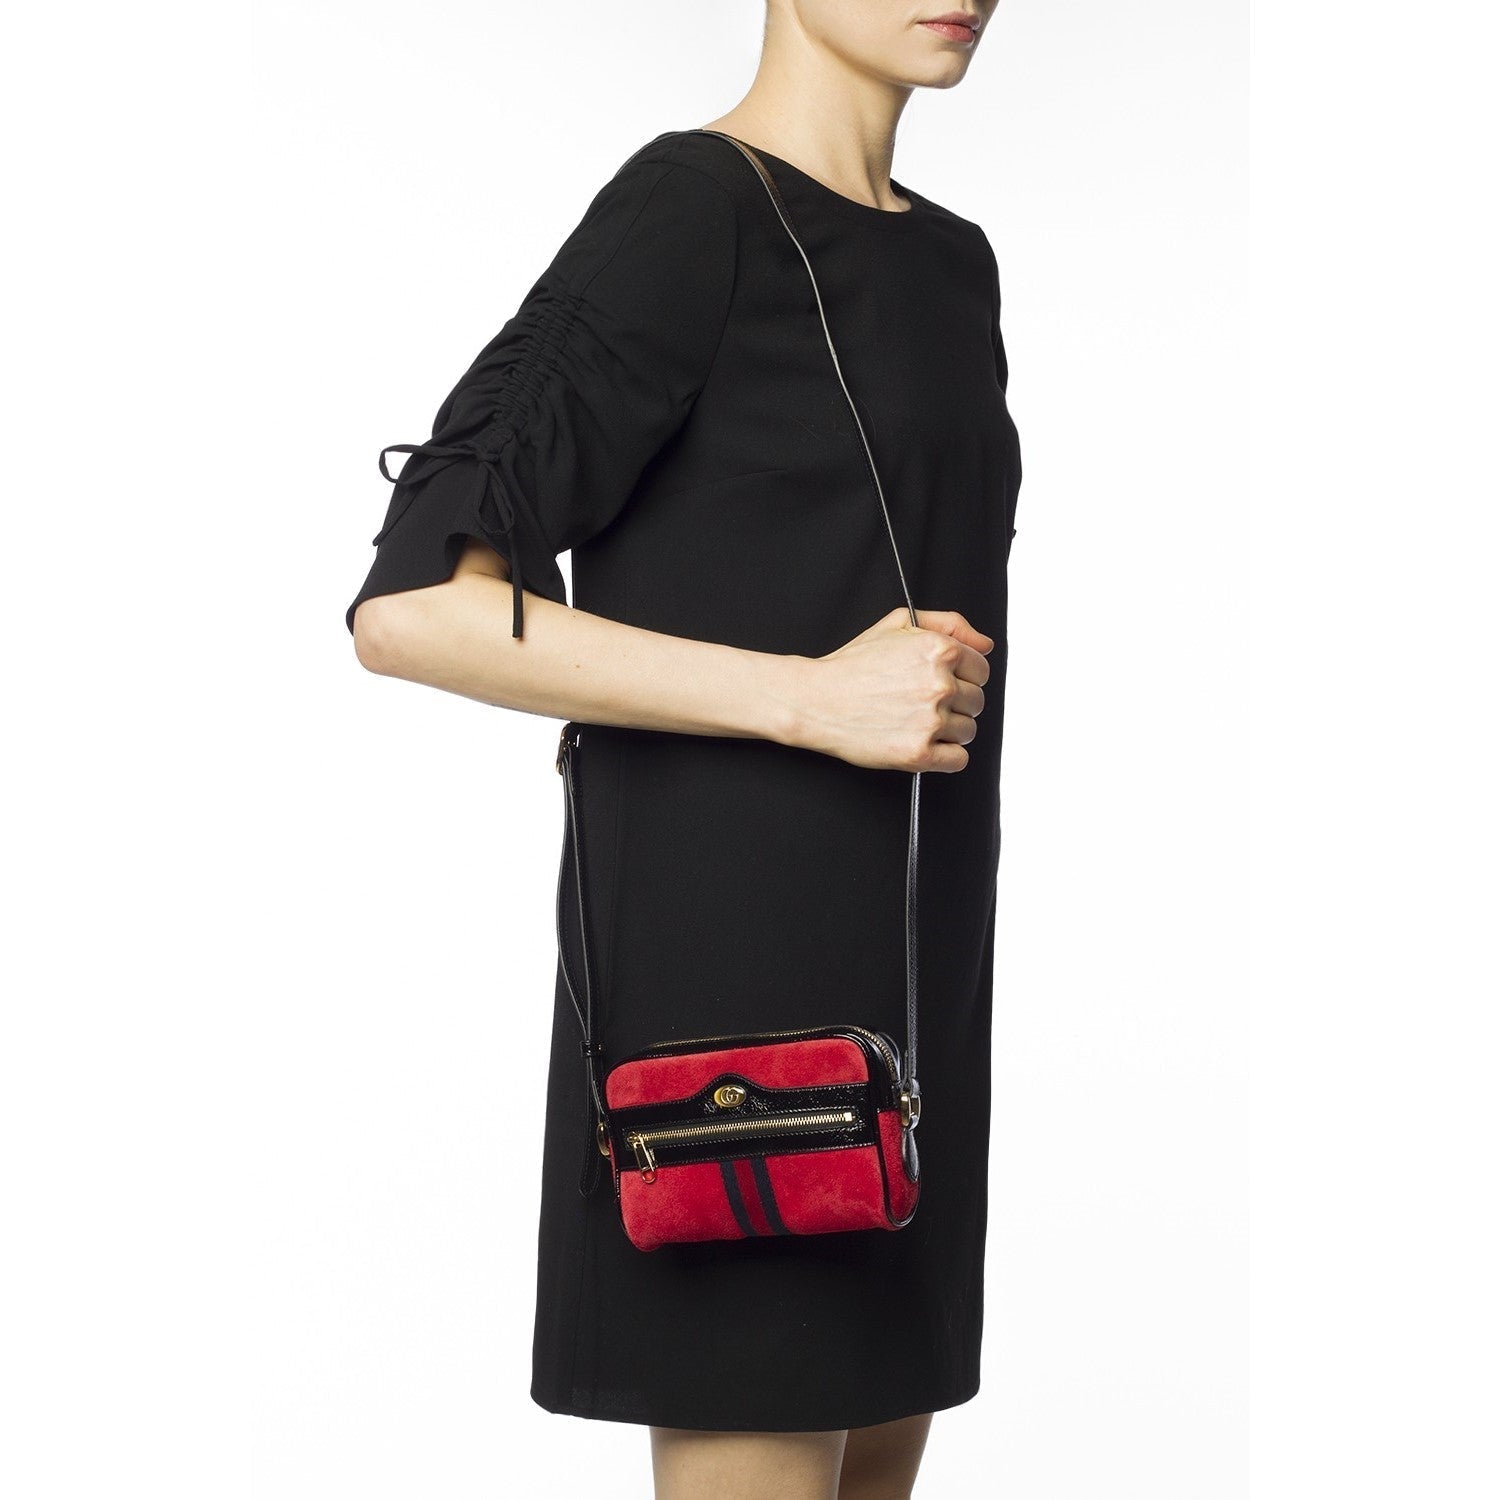 Gucci Ophidia Red Suede Patent Web Mini Shoulder Bag - LUXURYMRKT